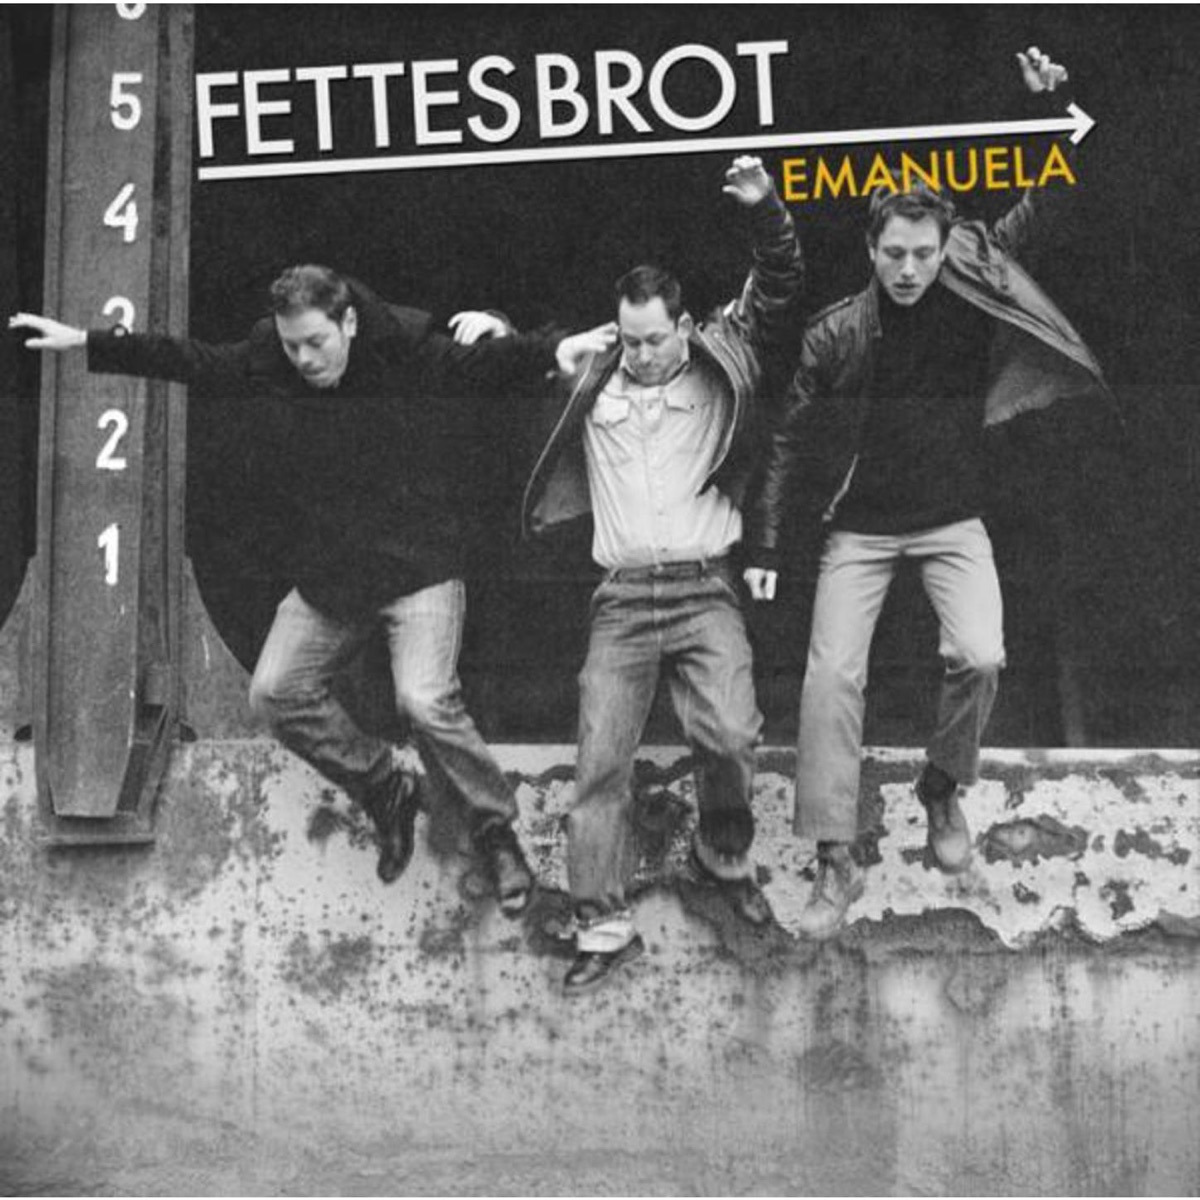 Fettes Brot — Emanuela cover artwork